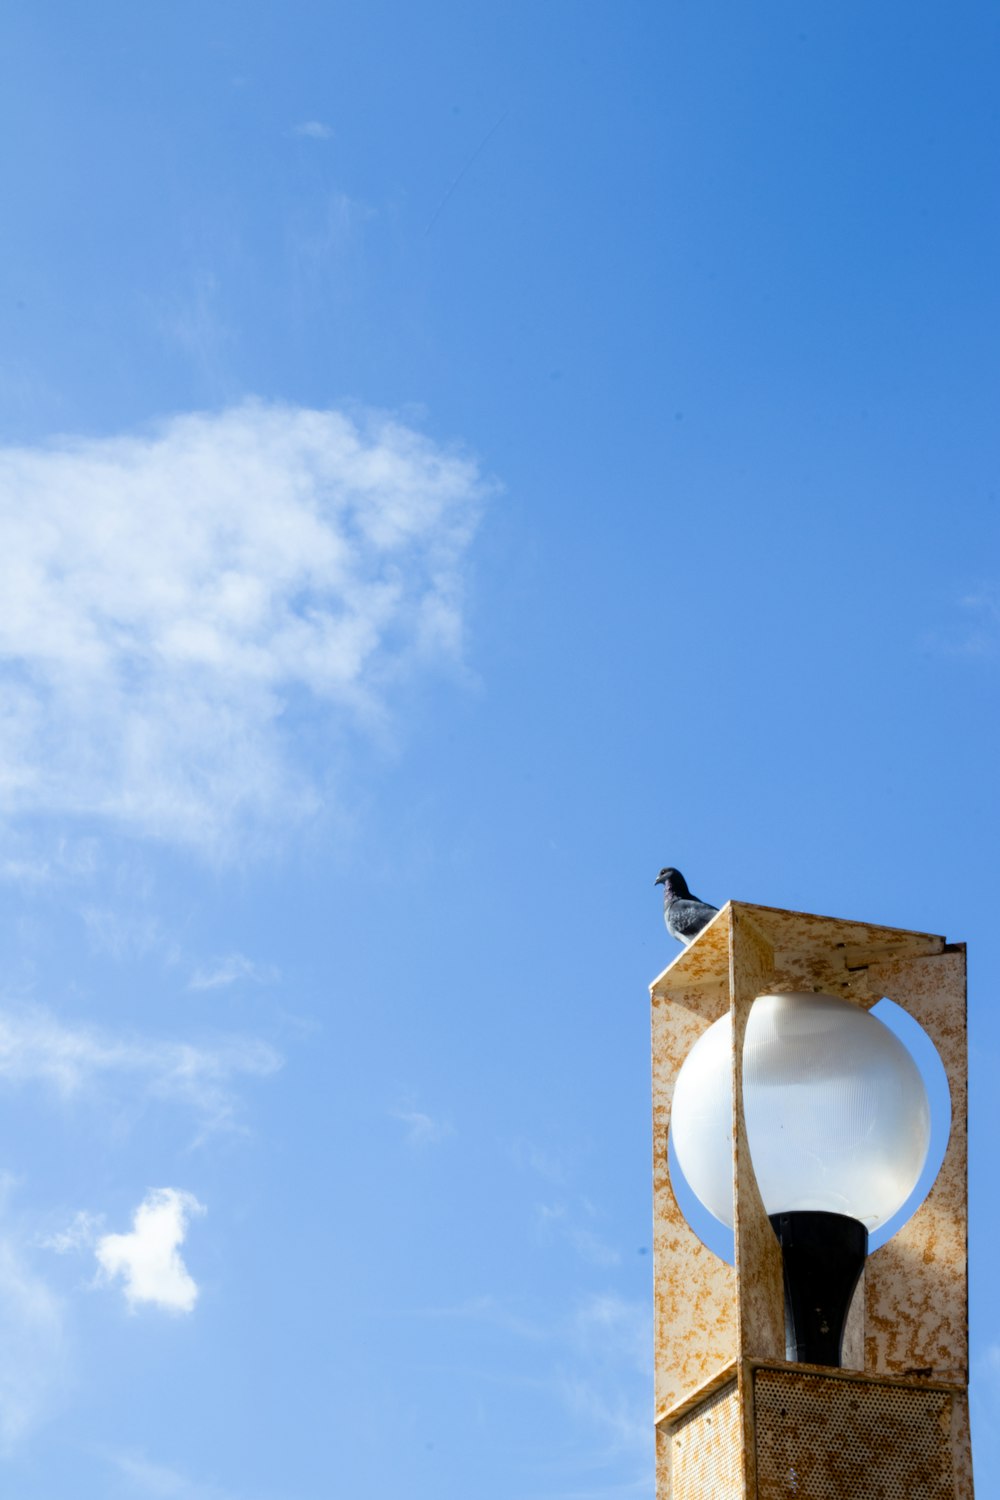 a bird sitting on top of a light pole